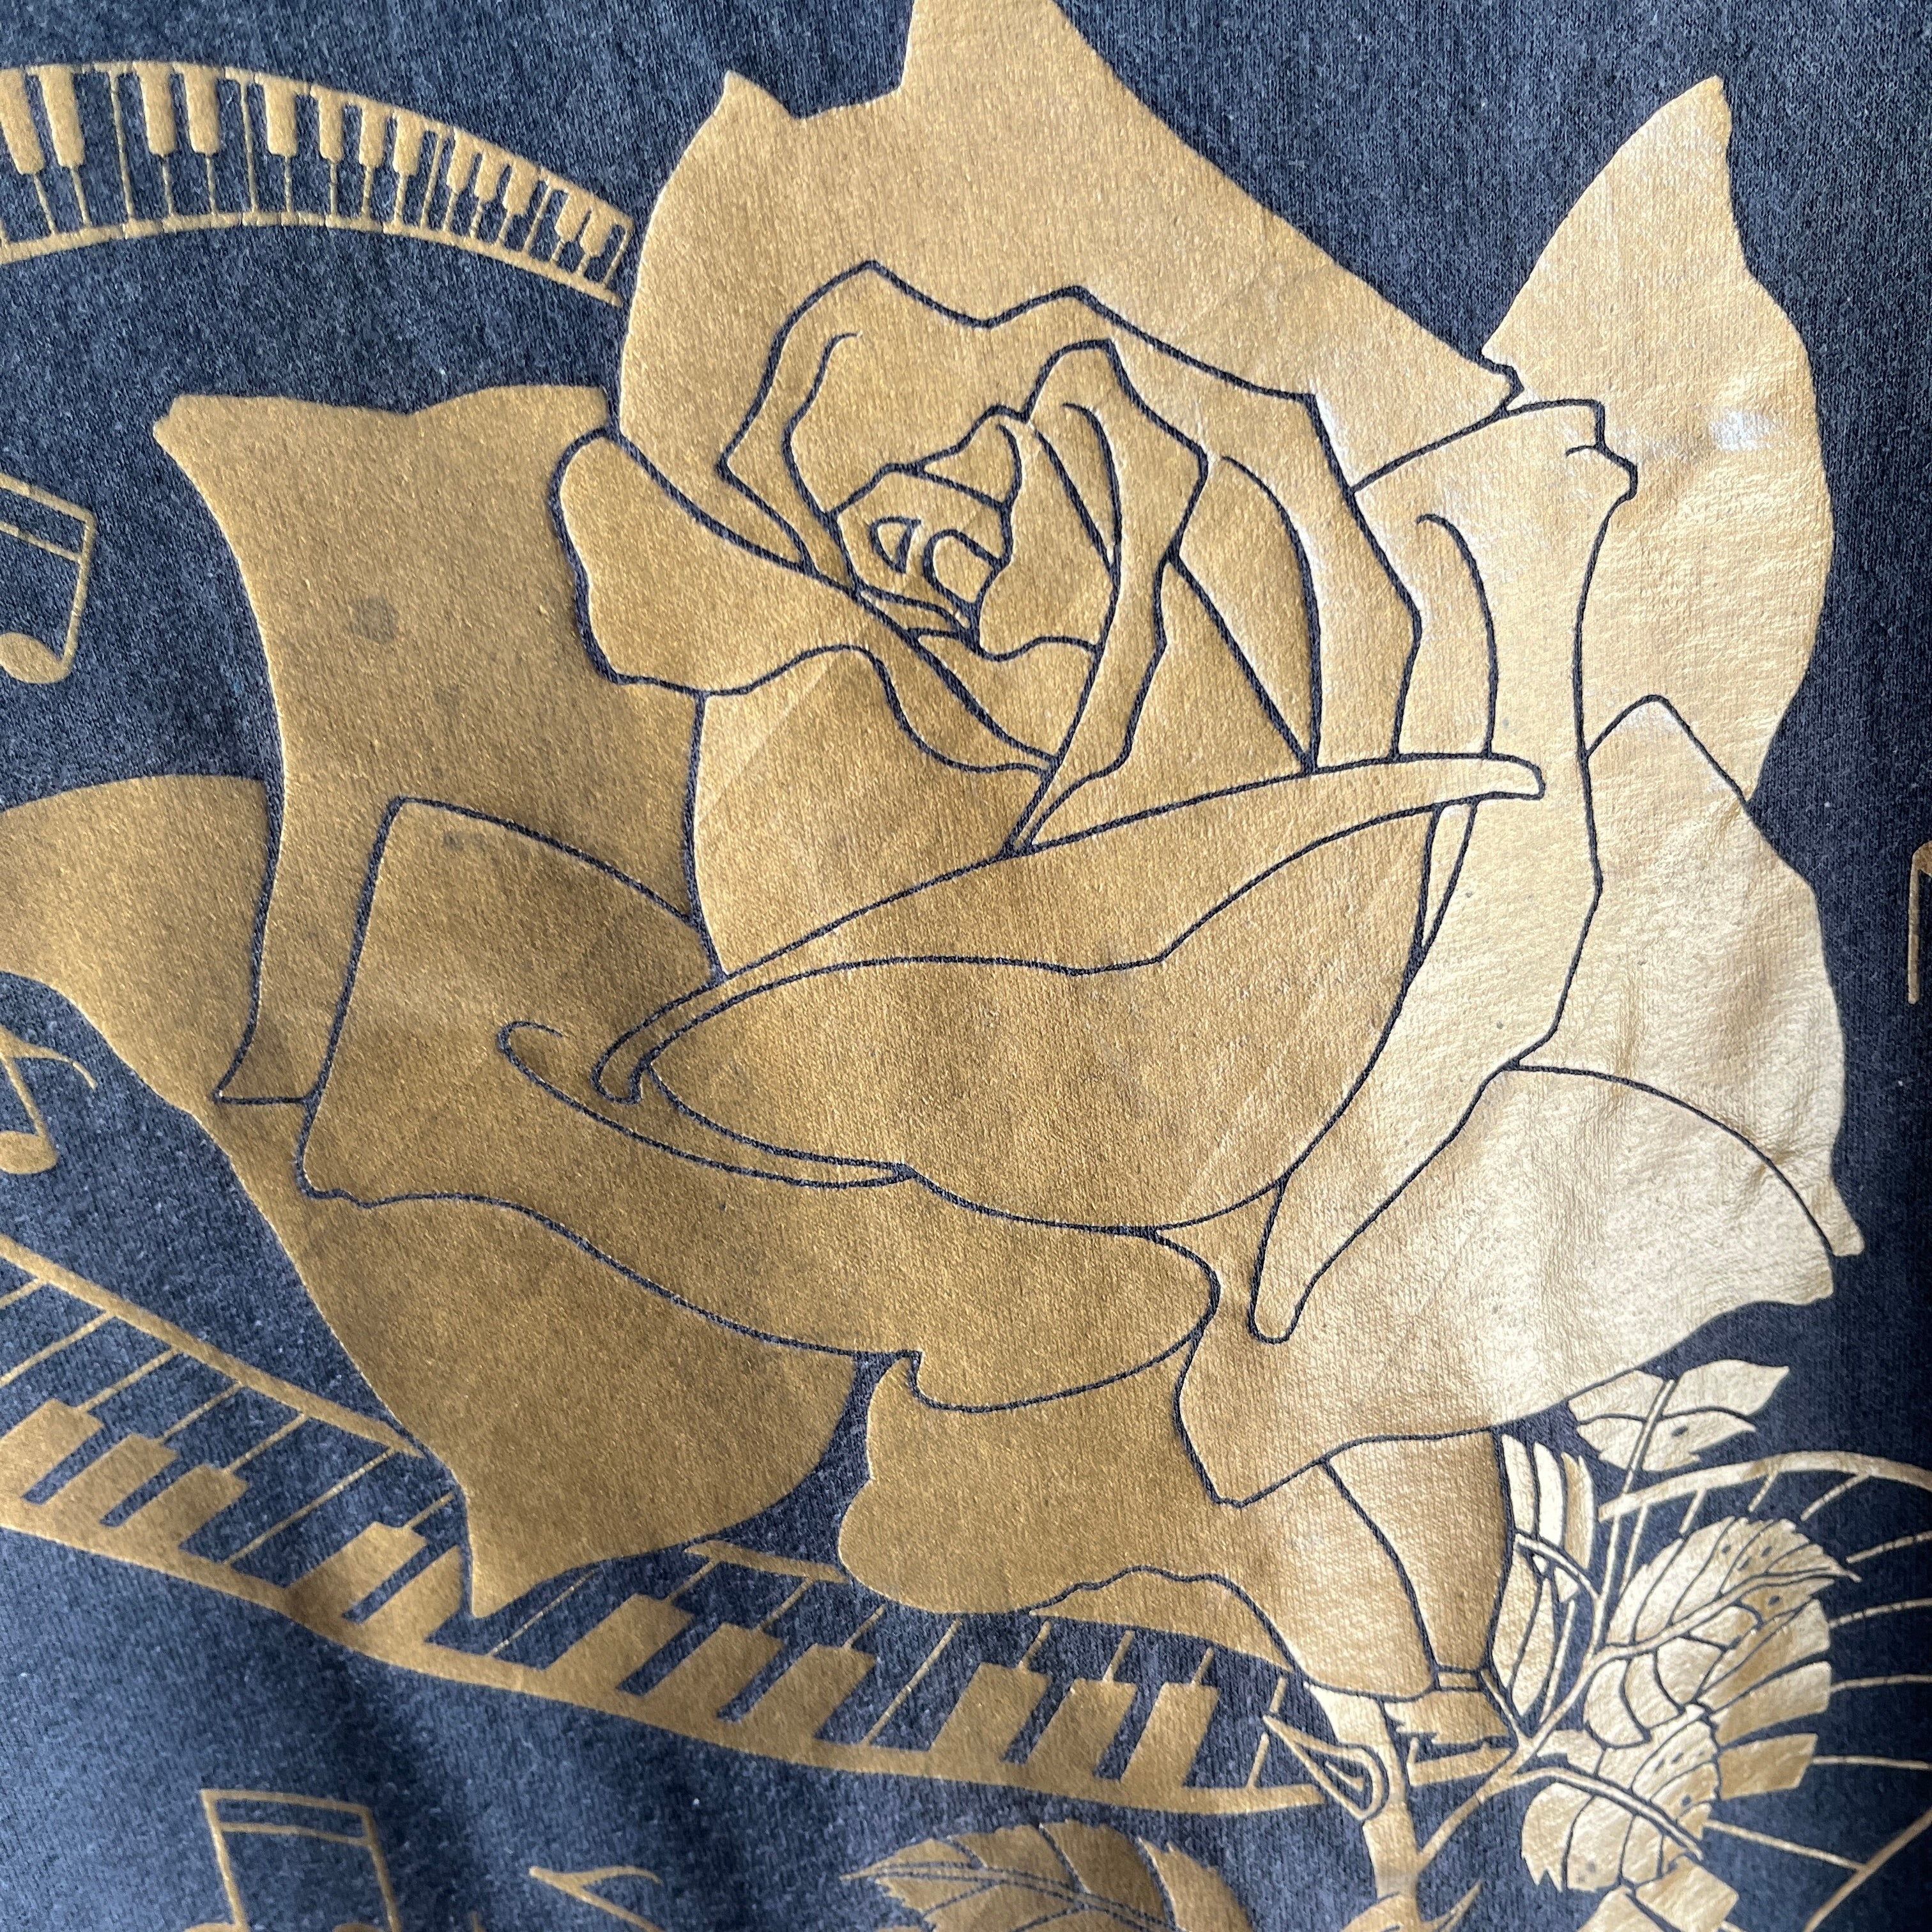 1989 Roses and Music Slightly Metallic Faded Black T-Shirt - Killer